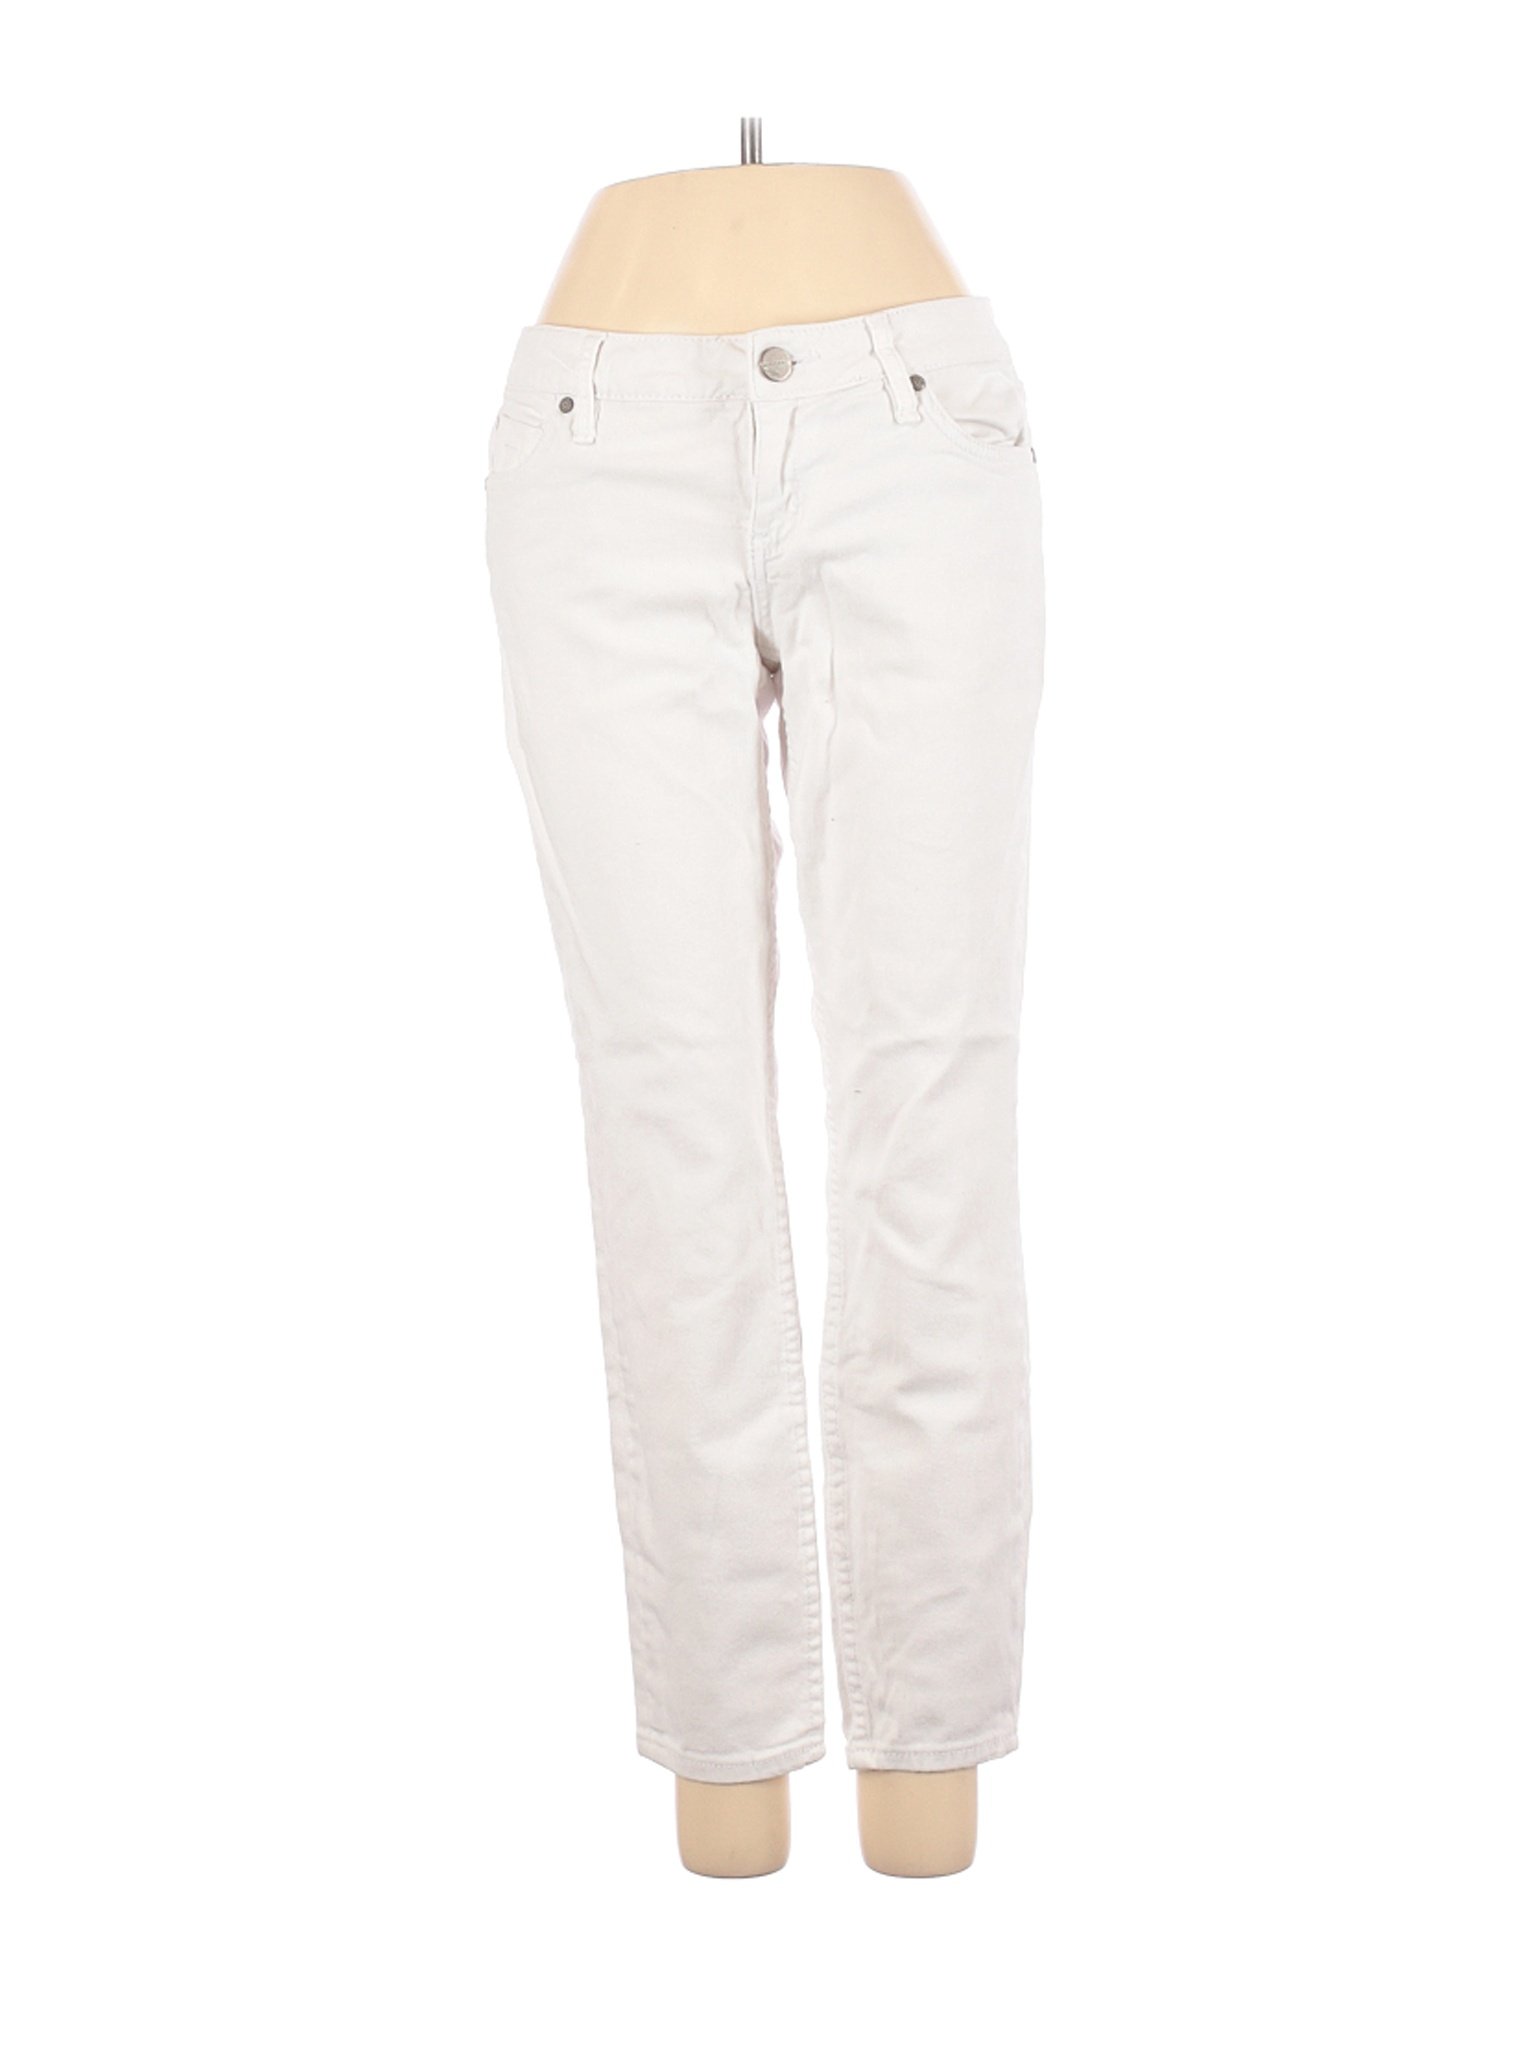 Sanctuary / DENIM Women White Jeans 26W | eBay